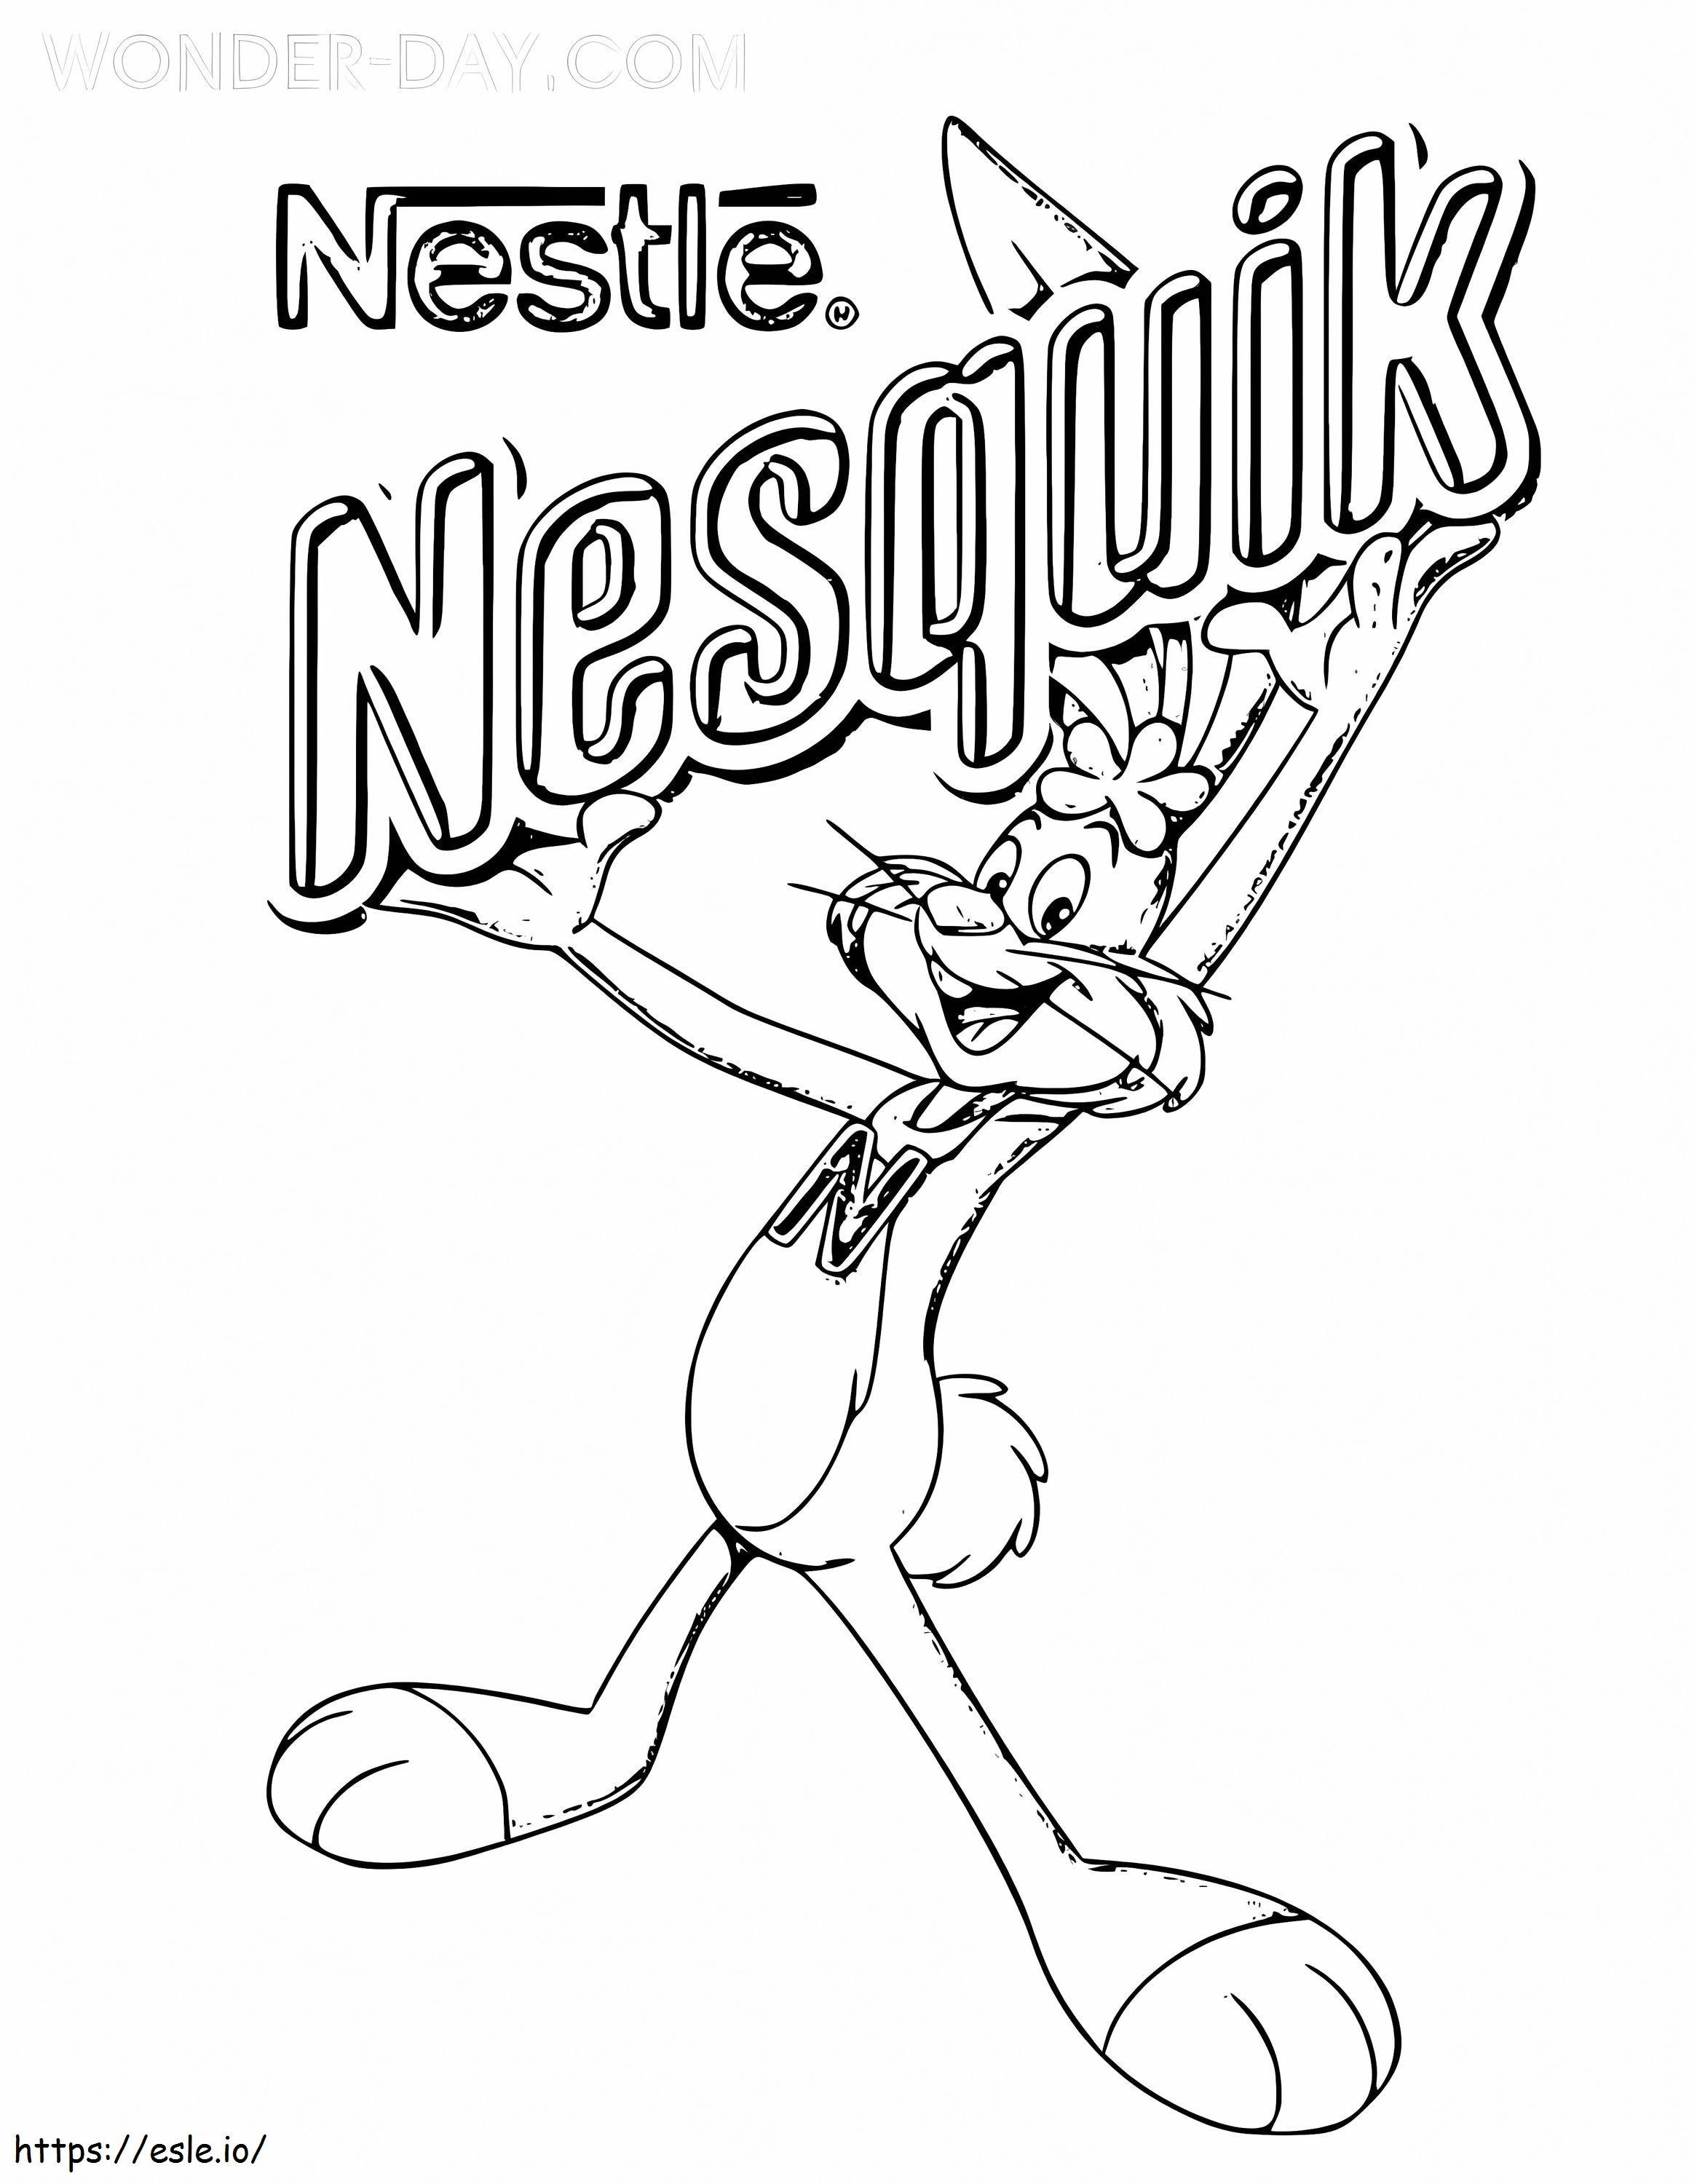 Nesquik-Logo ausmalbilder